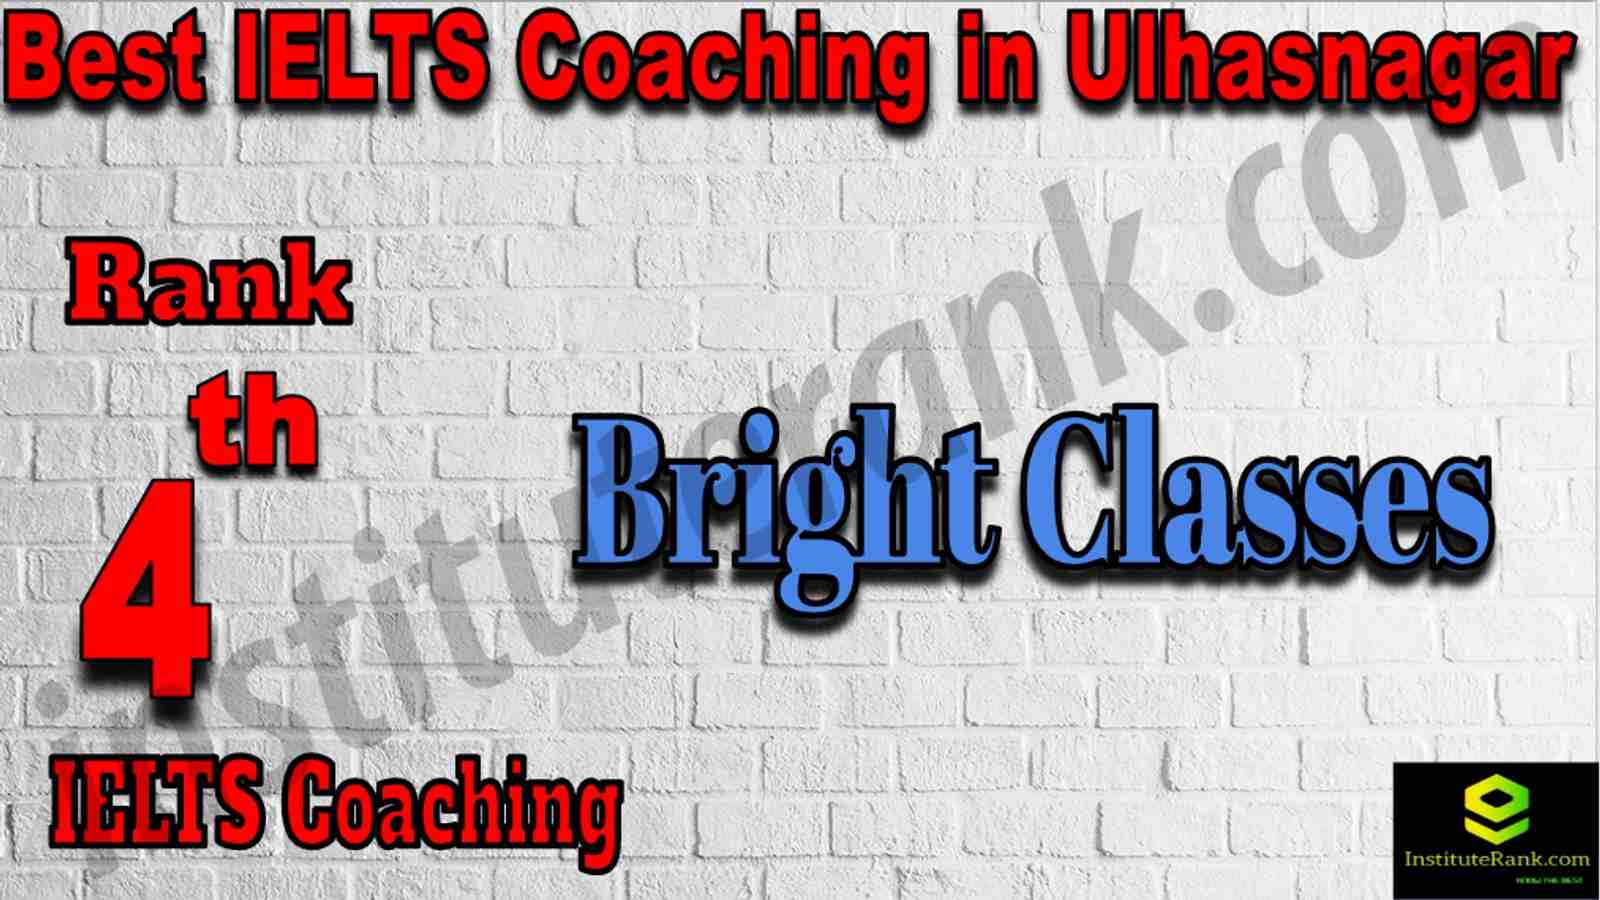 4th Best IELTS Coaching in Ulhasnagar